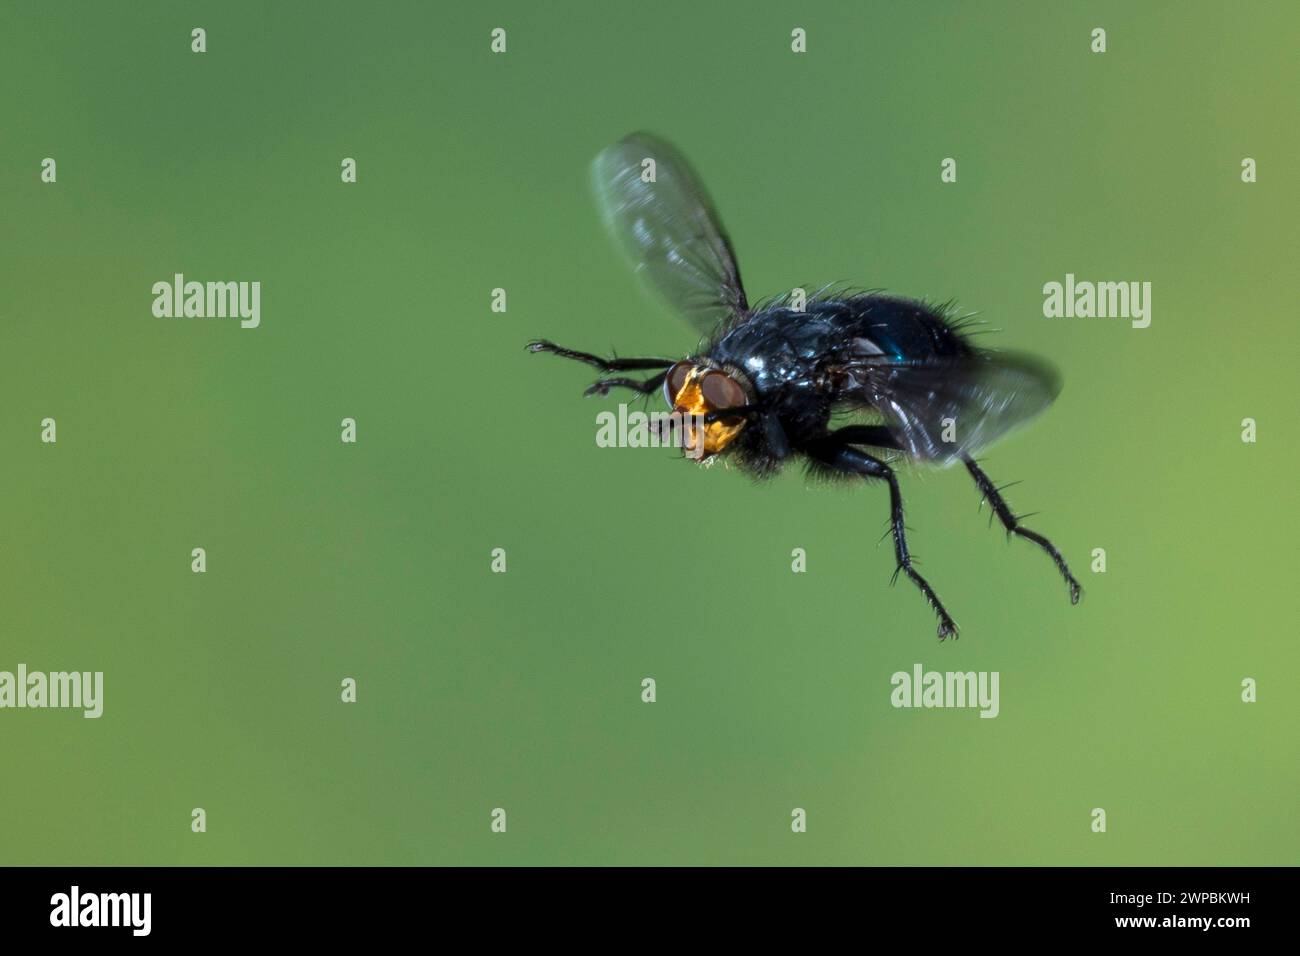 Fly of the dead, Bluebottle Blow Fly (Cynomya mortuorum, Cynomya hirta), male in flight, high speed photography, Germany Stock Photo